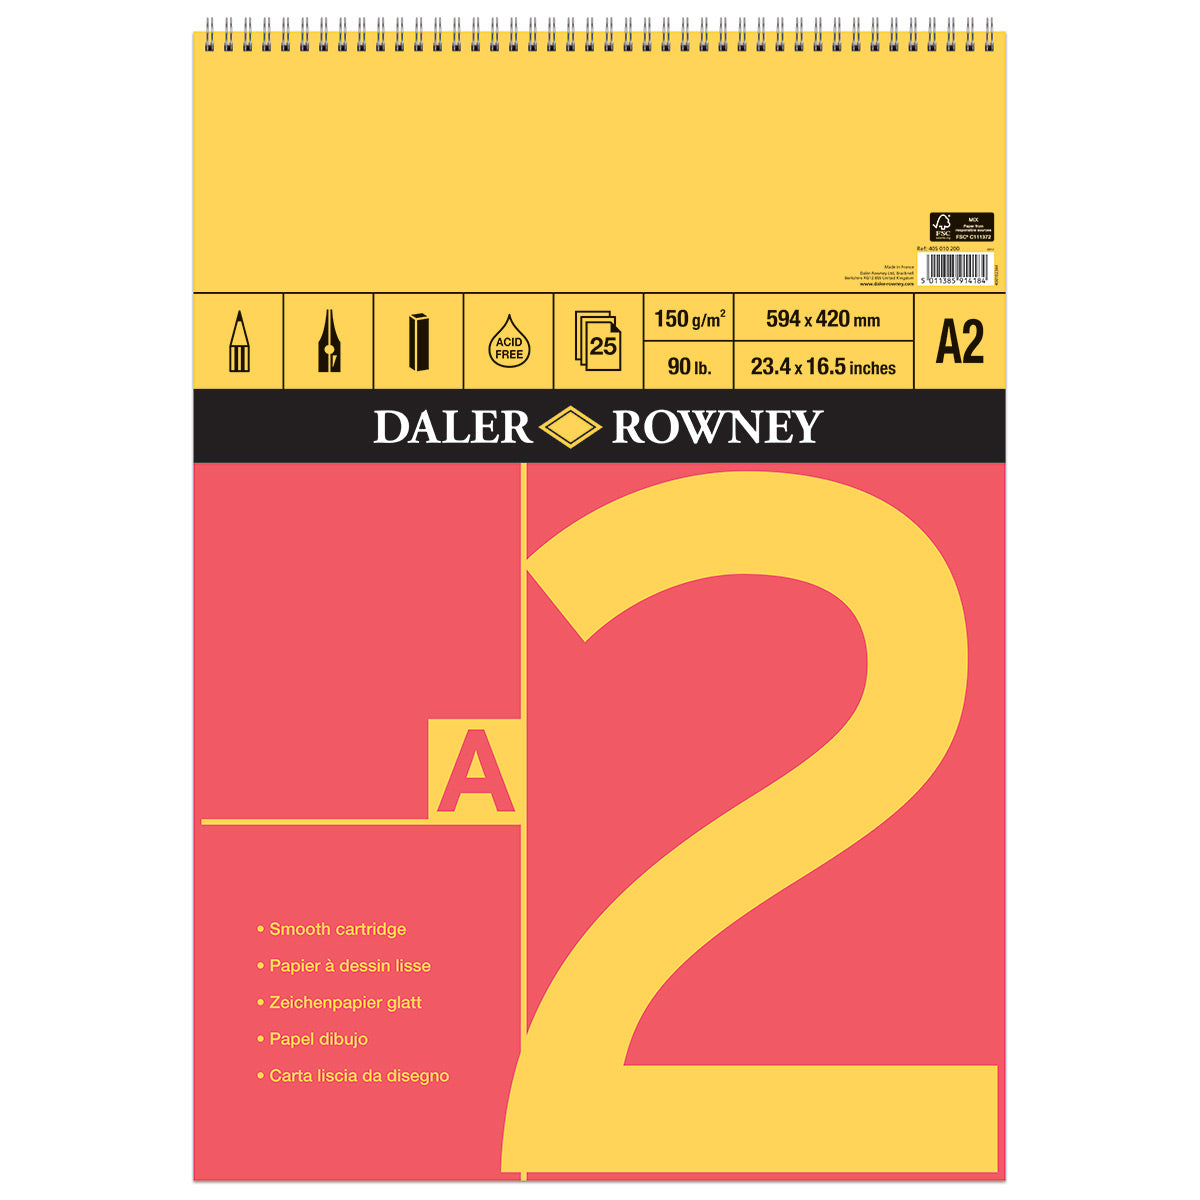 Daler Rowney - Blocco per schizzi a cartuccia a spirale rossa e gialla - A2 - 150 g/m² - 25 fogli